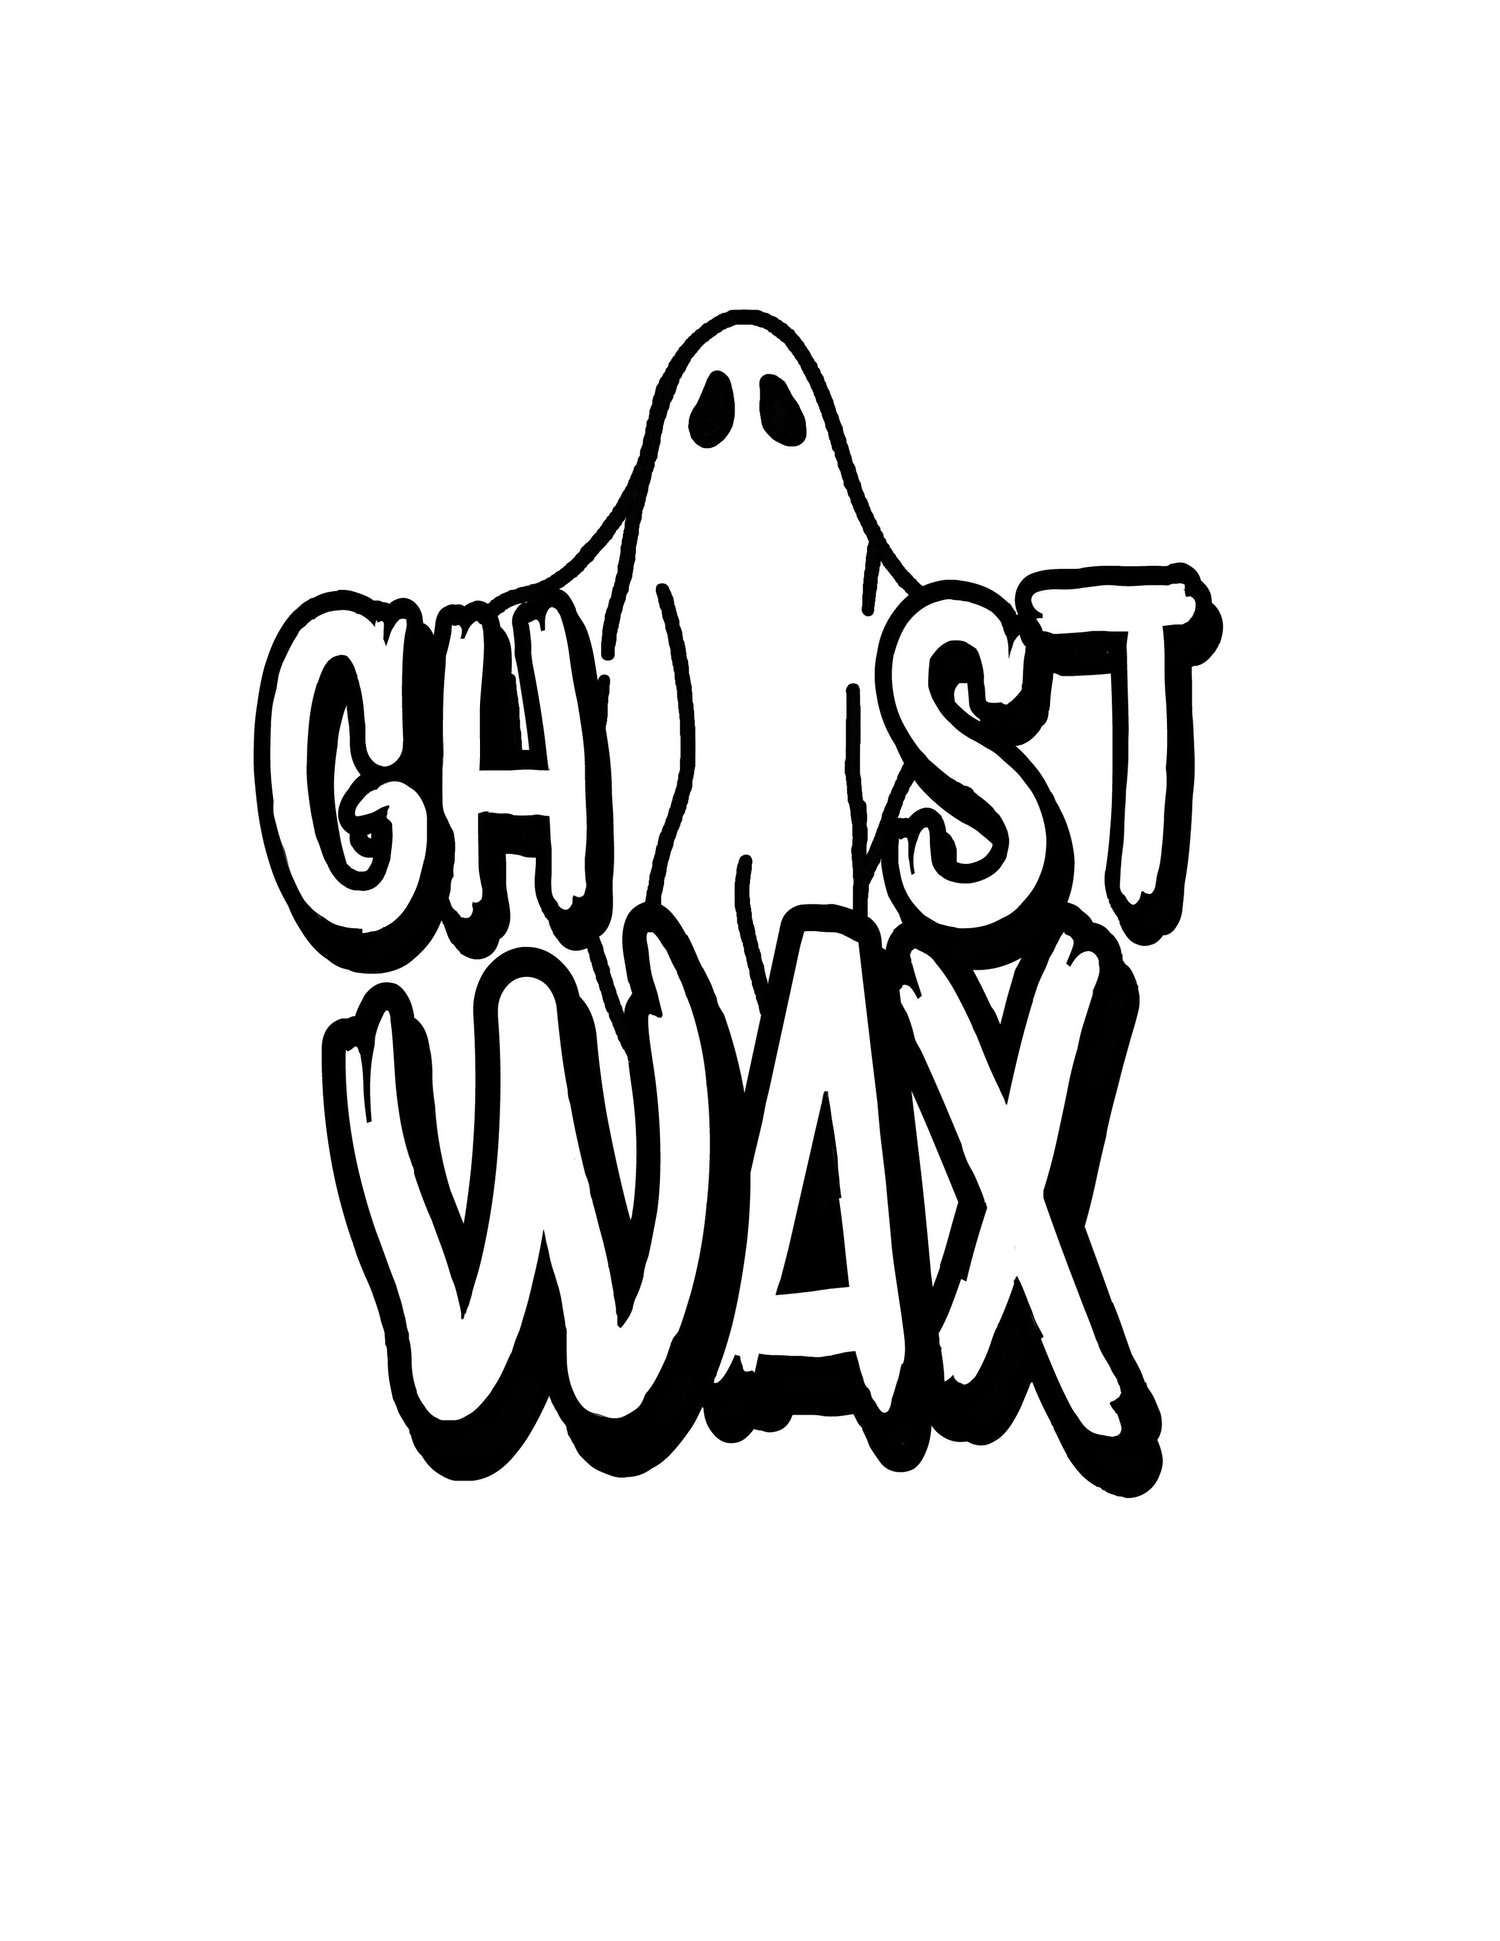 Ghost Wax